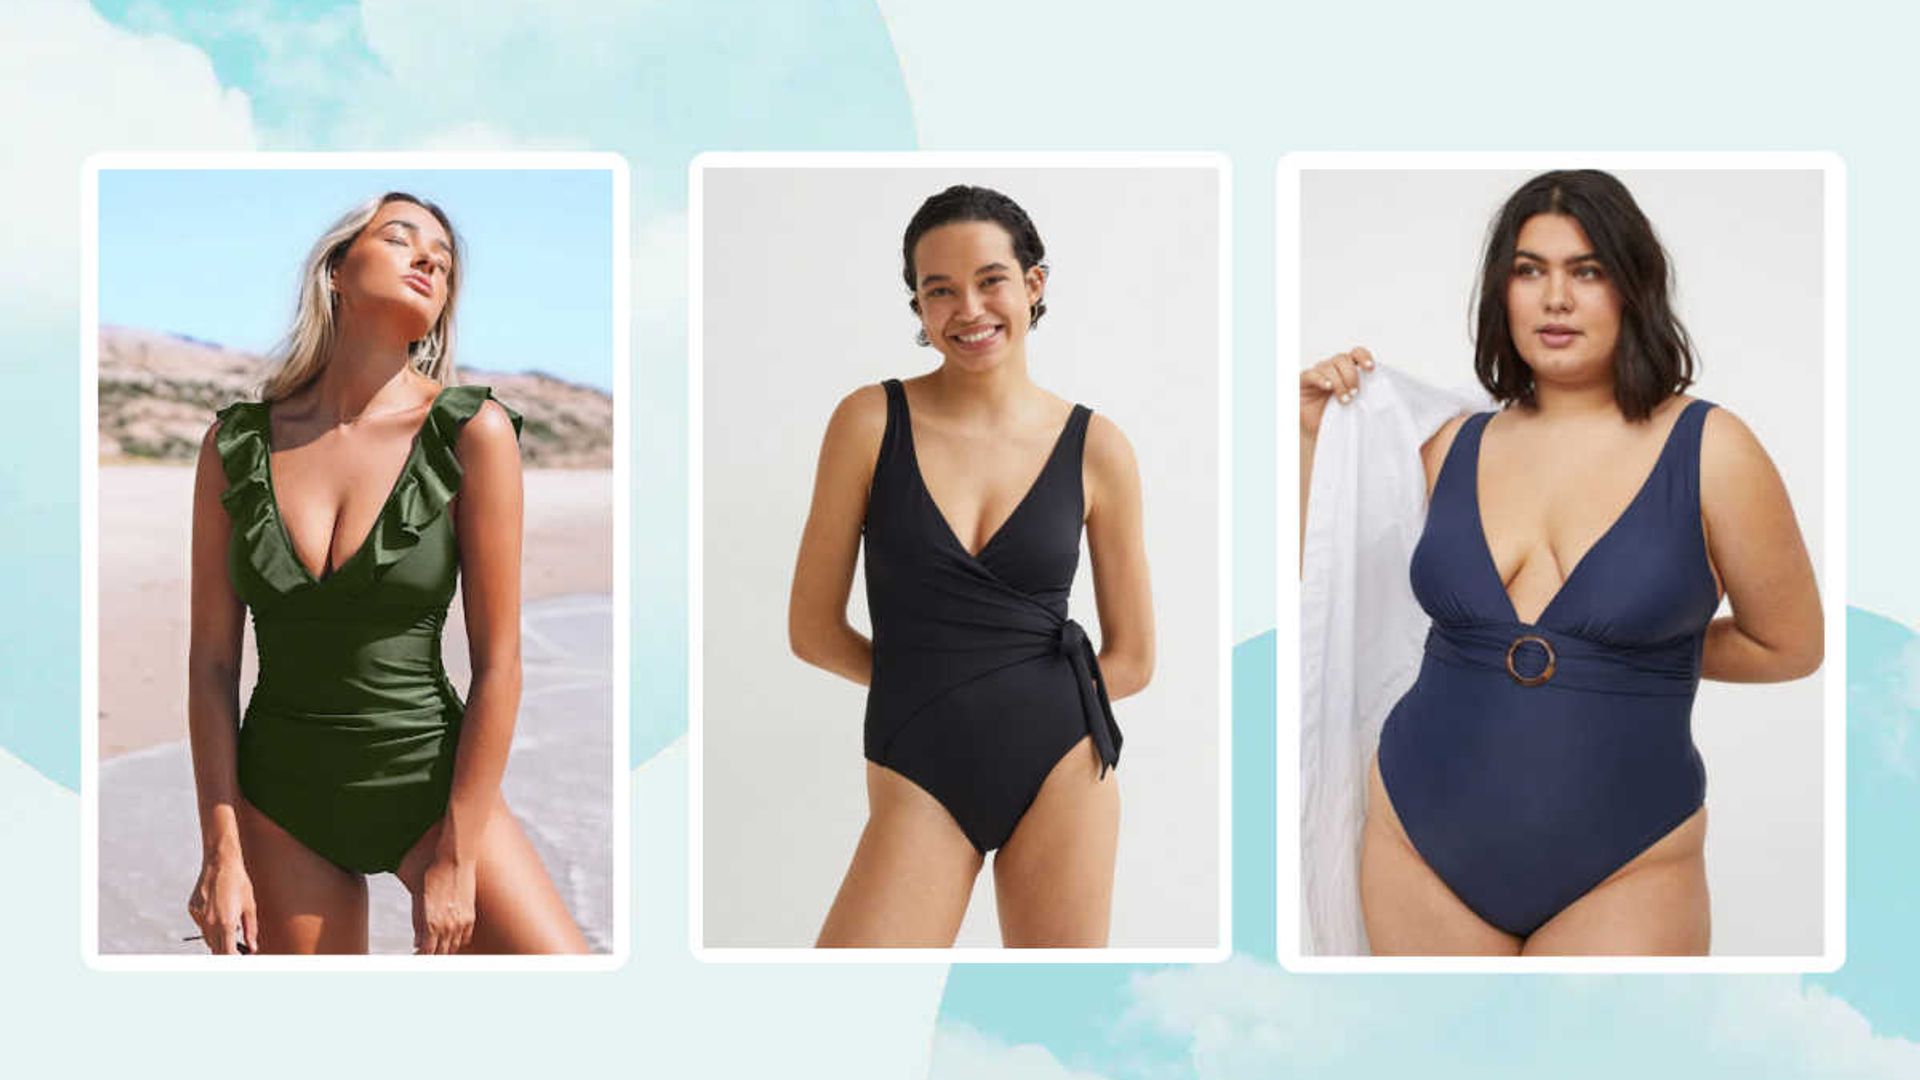 Delimira Womens Square Neck Tummy Control Underwire Plus Size One Piece Swimsuits